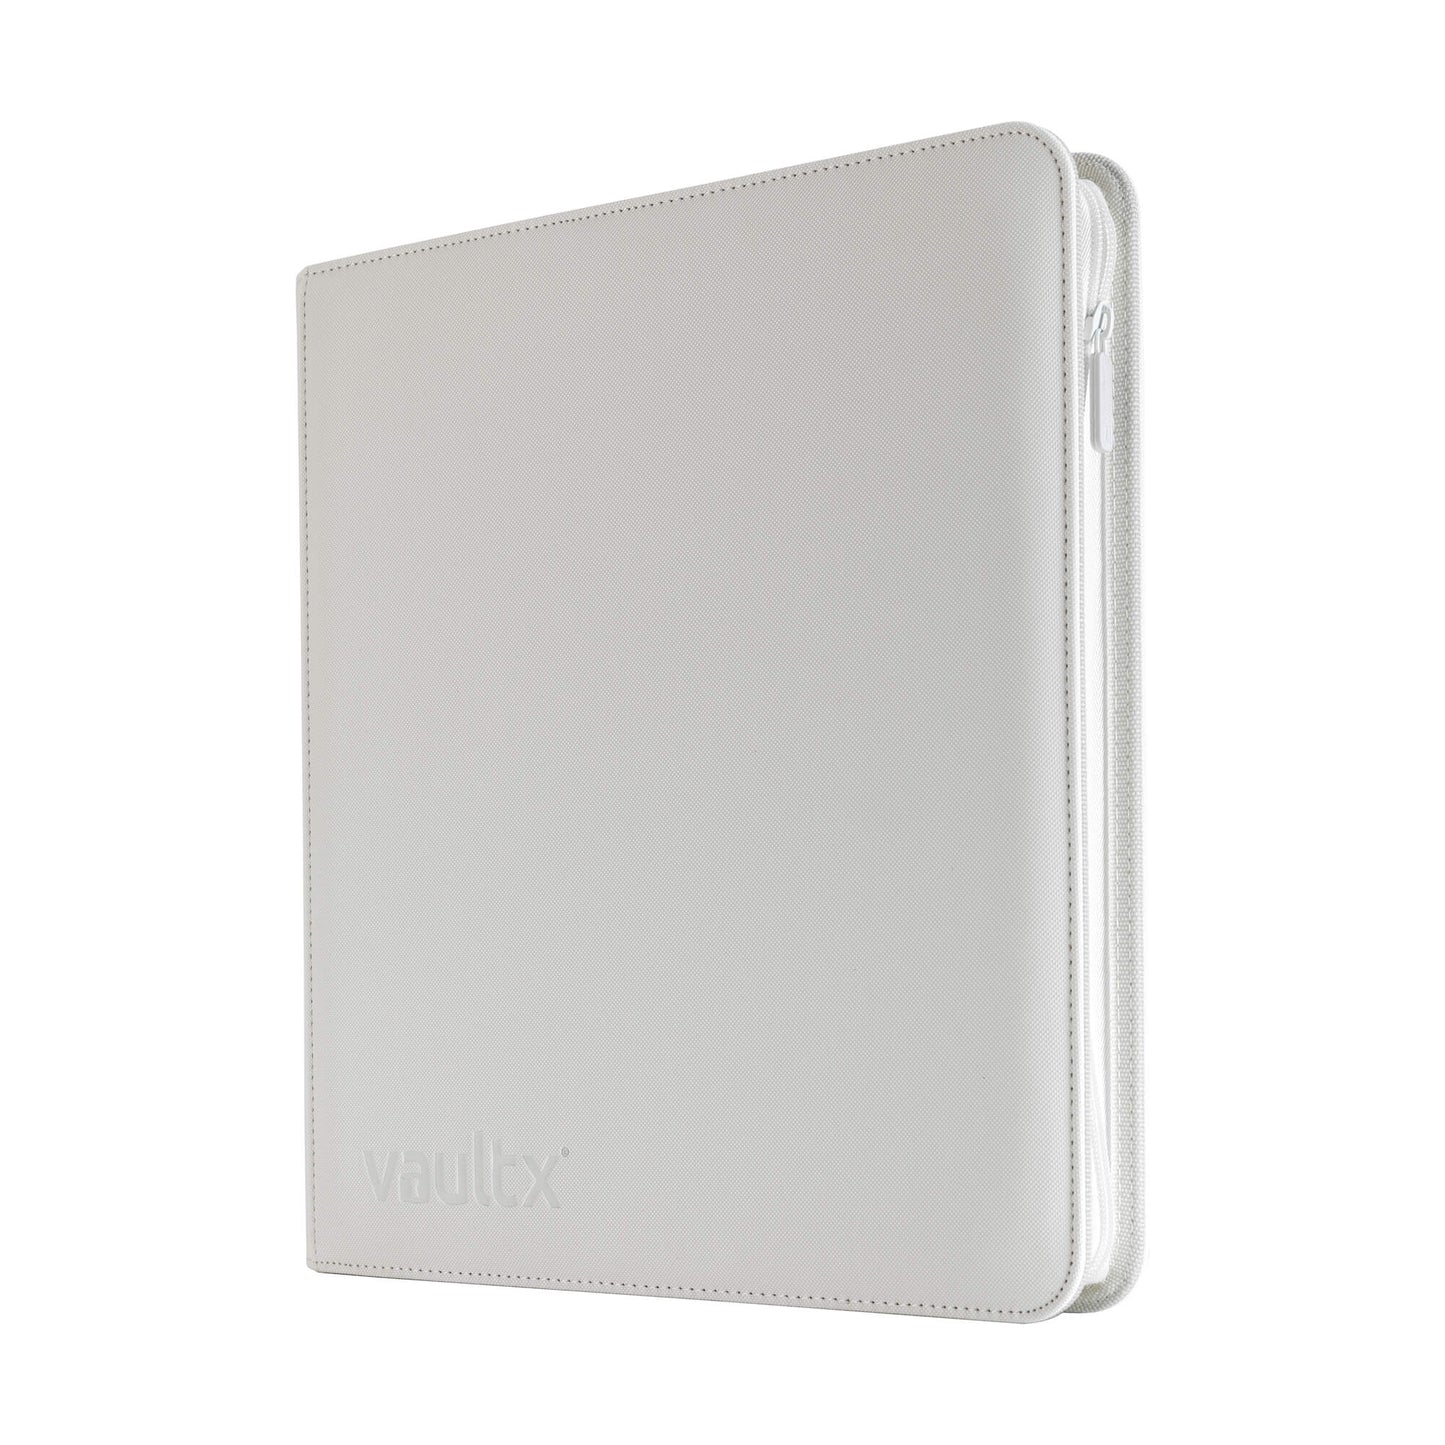 12-Pocket Exo-Tec® Zip Binder White Edition